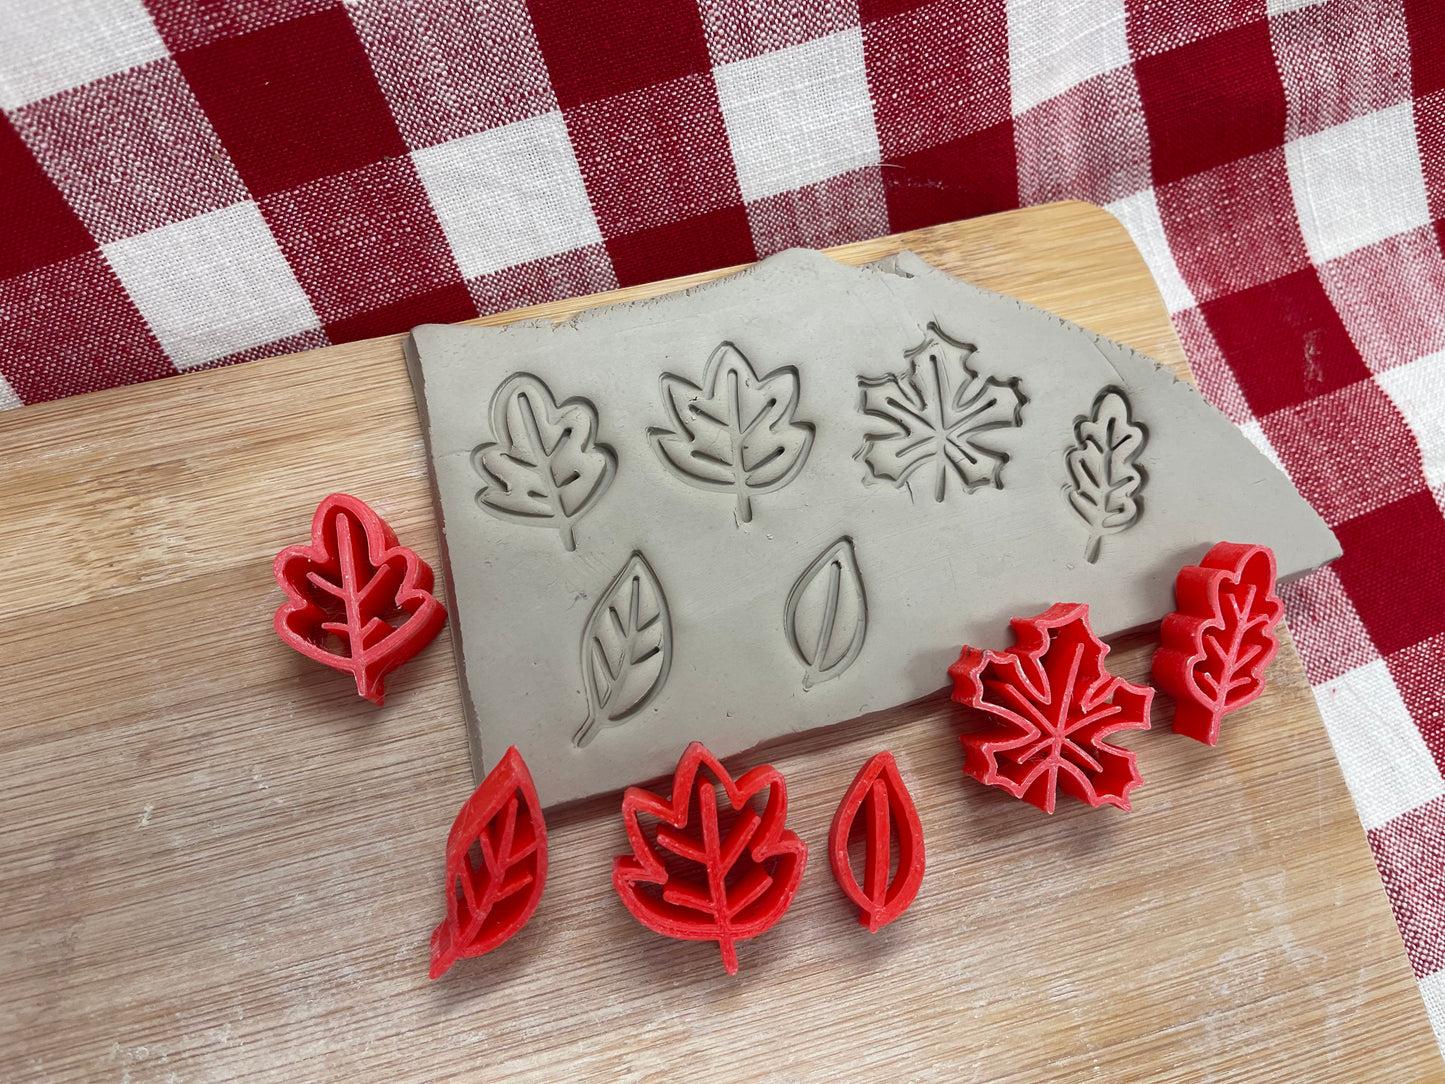 Autumn Elements Stamp Series - Mini Leaves design set of 6, plastic 3D printed, Pottery Tool